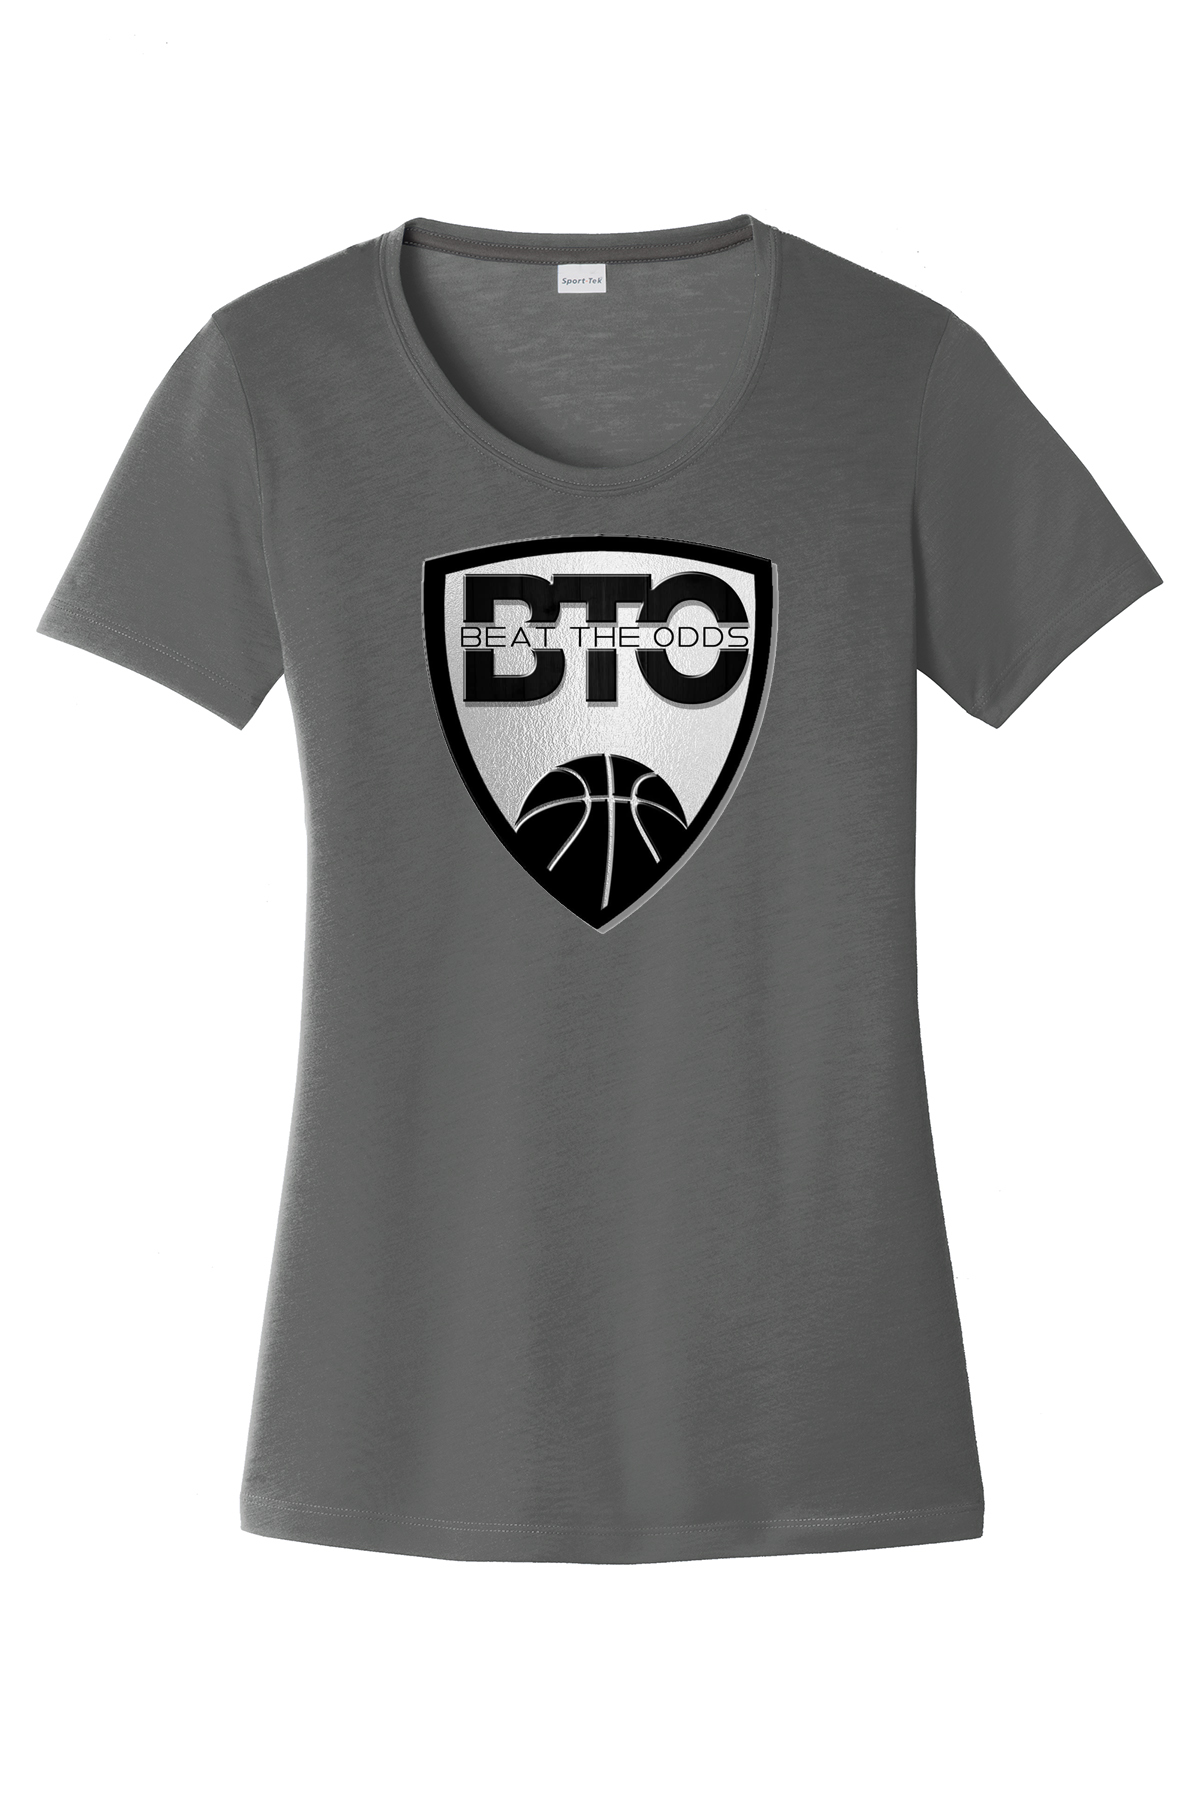 BTO Basketball Women's CottonTouch Performance T-Shirt